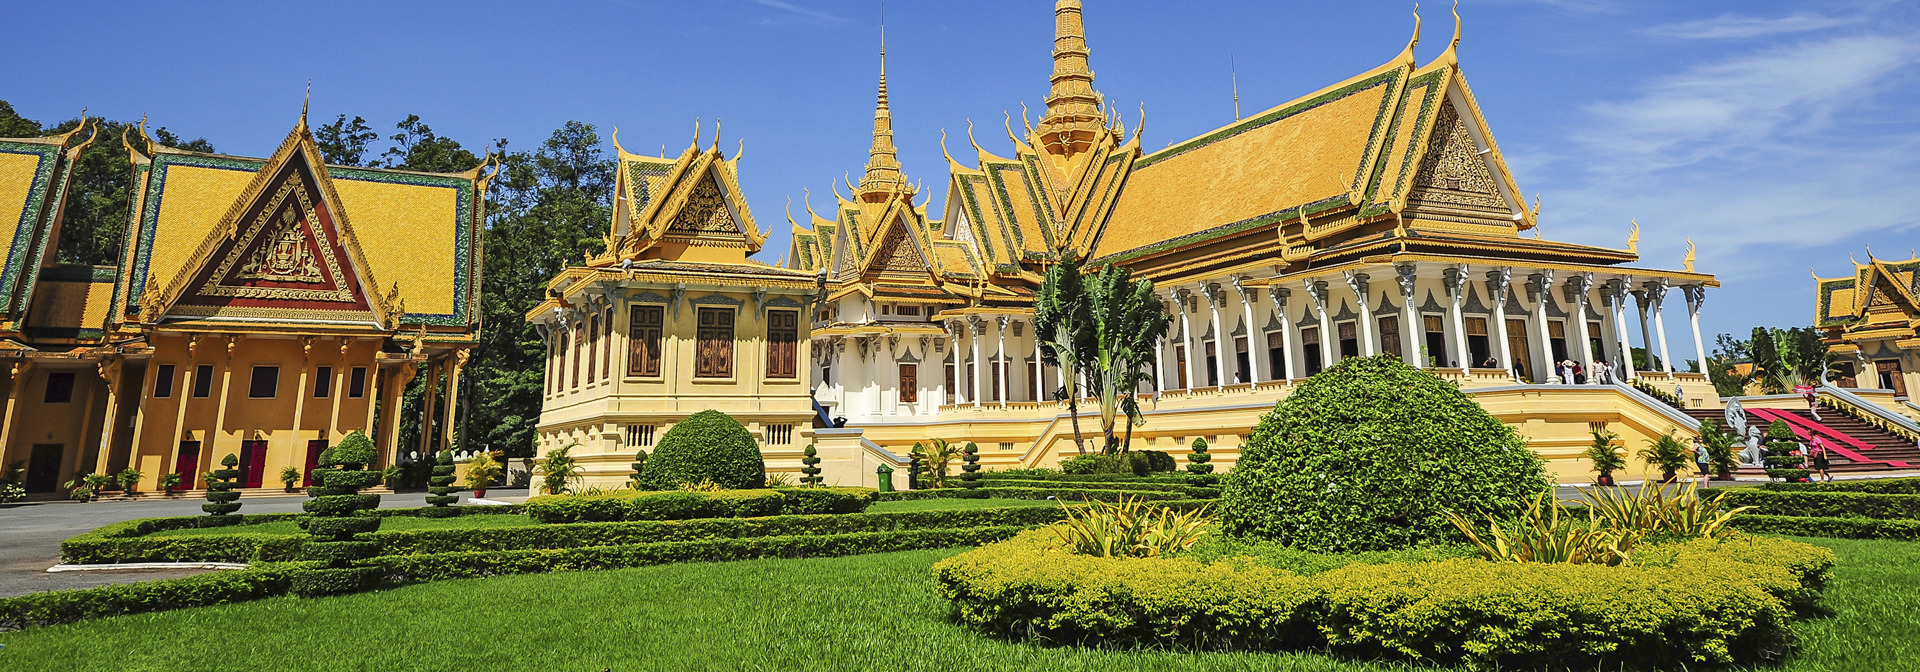 cambodia - phnom pehn royale palace_05